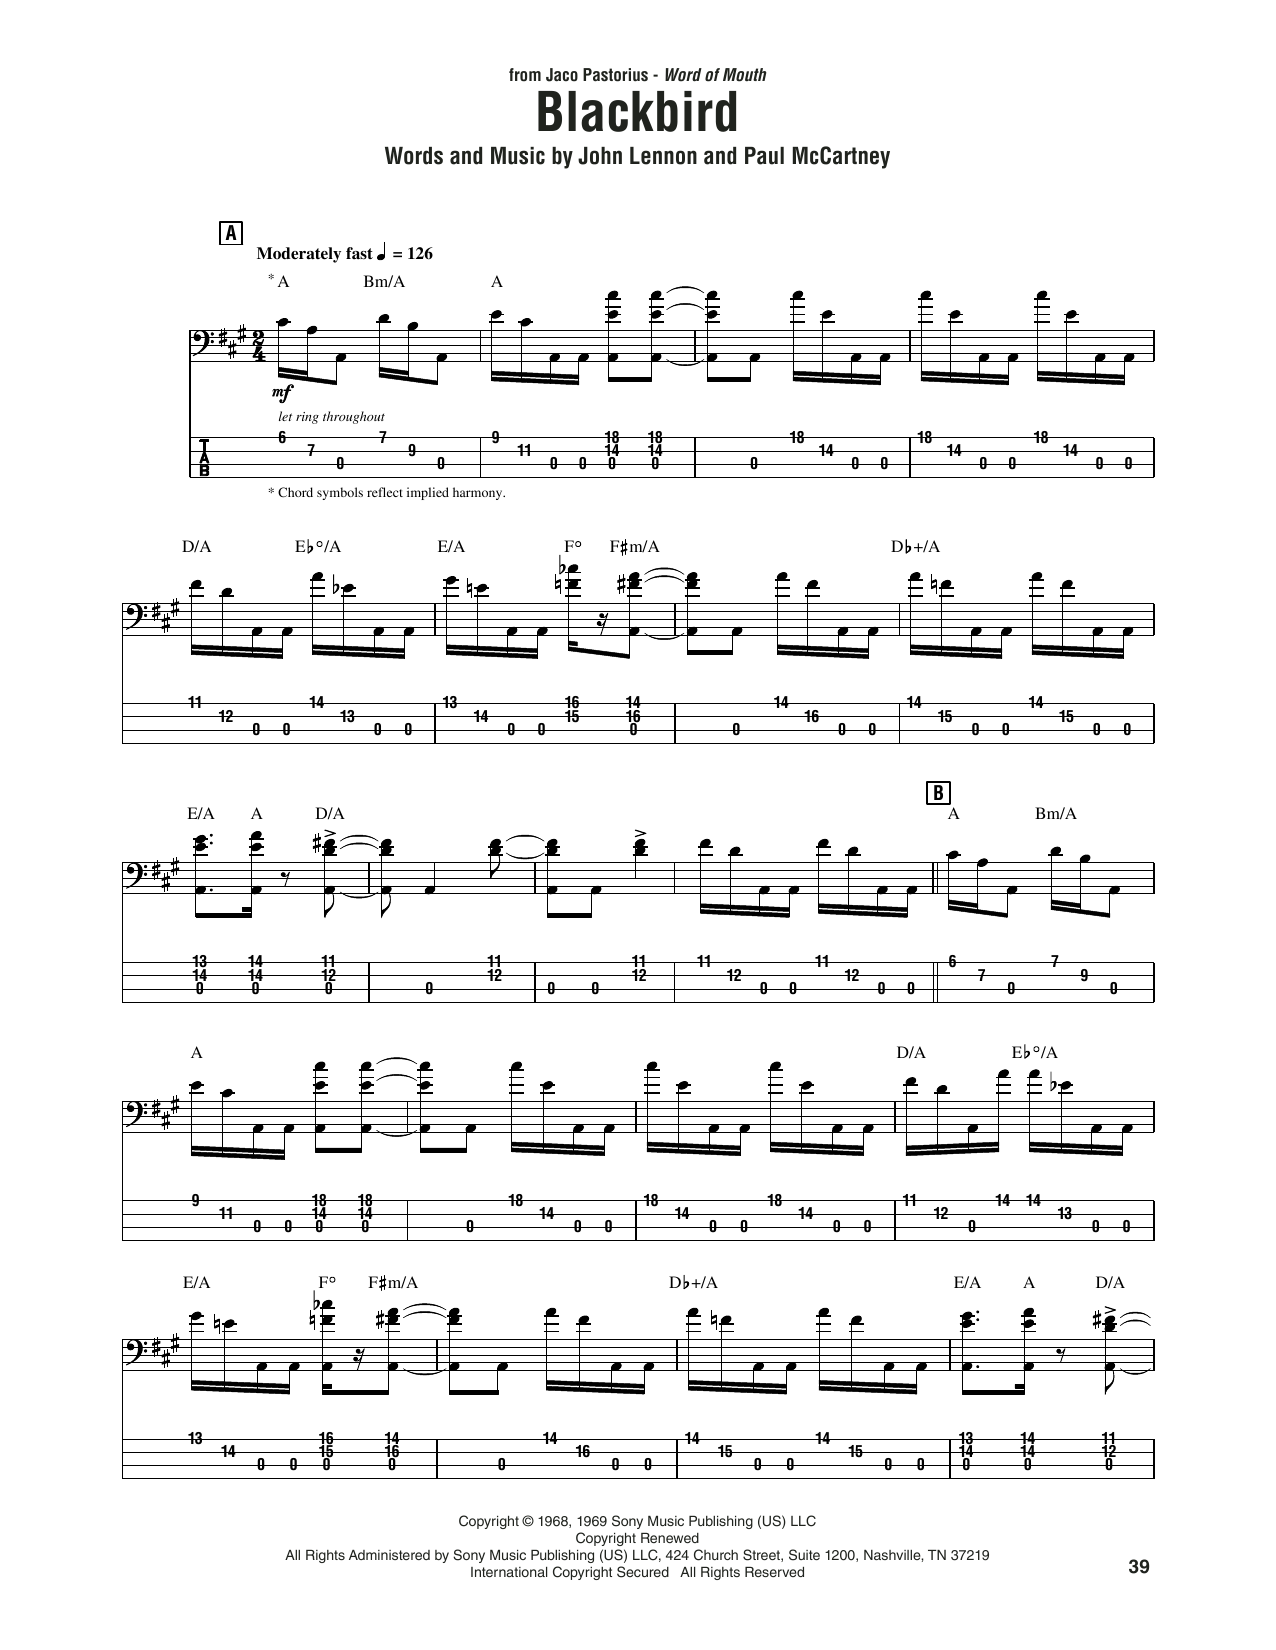 Jaco Pastorius Blackbird Sheet Music Notes & Chords for Bass Guitar Tab - Download or Print PDF